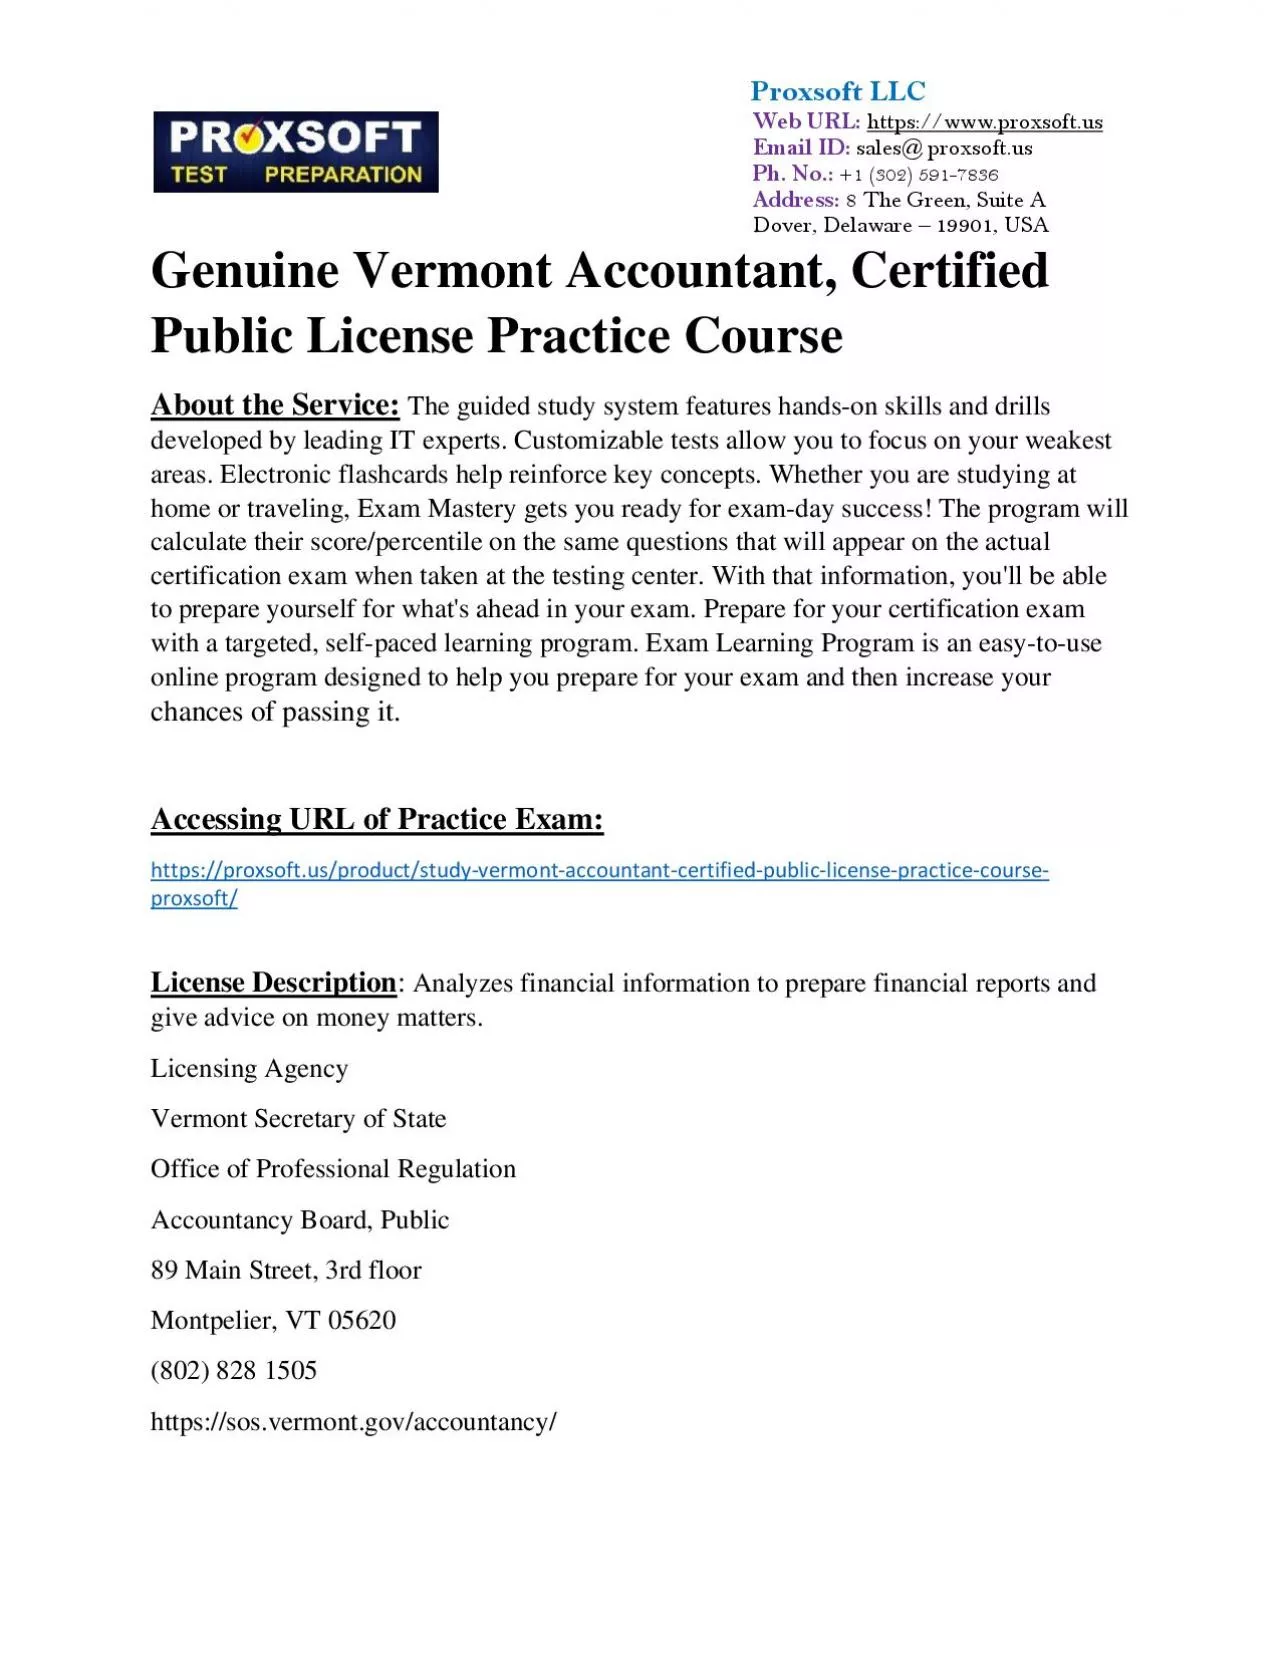 Genuine Vermont Accountant, Certified Public License Practice Course